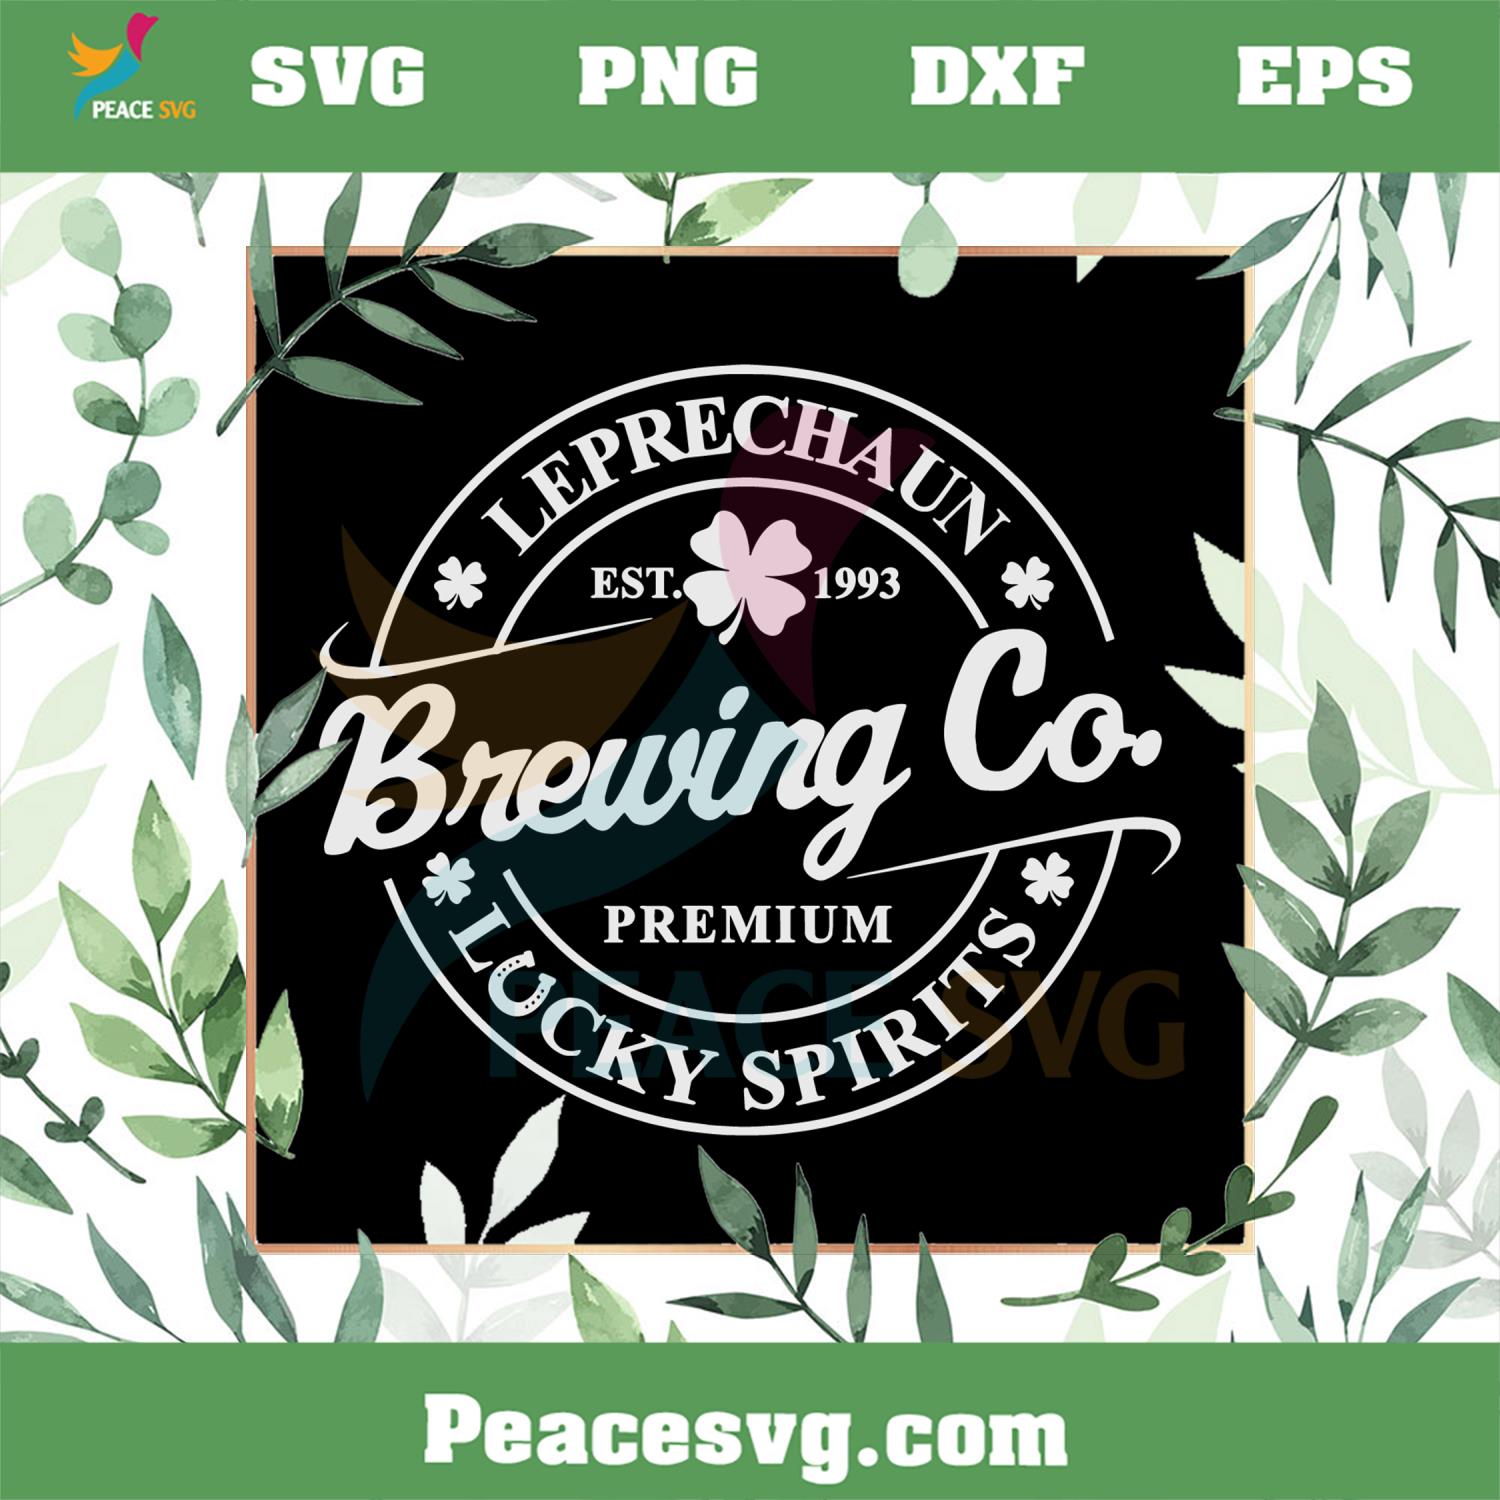 St Patrick’s Day Leprechaun Brewing Co SVG Cutting Files